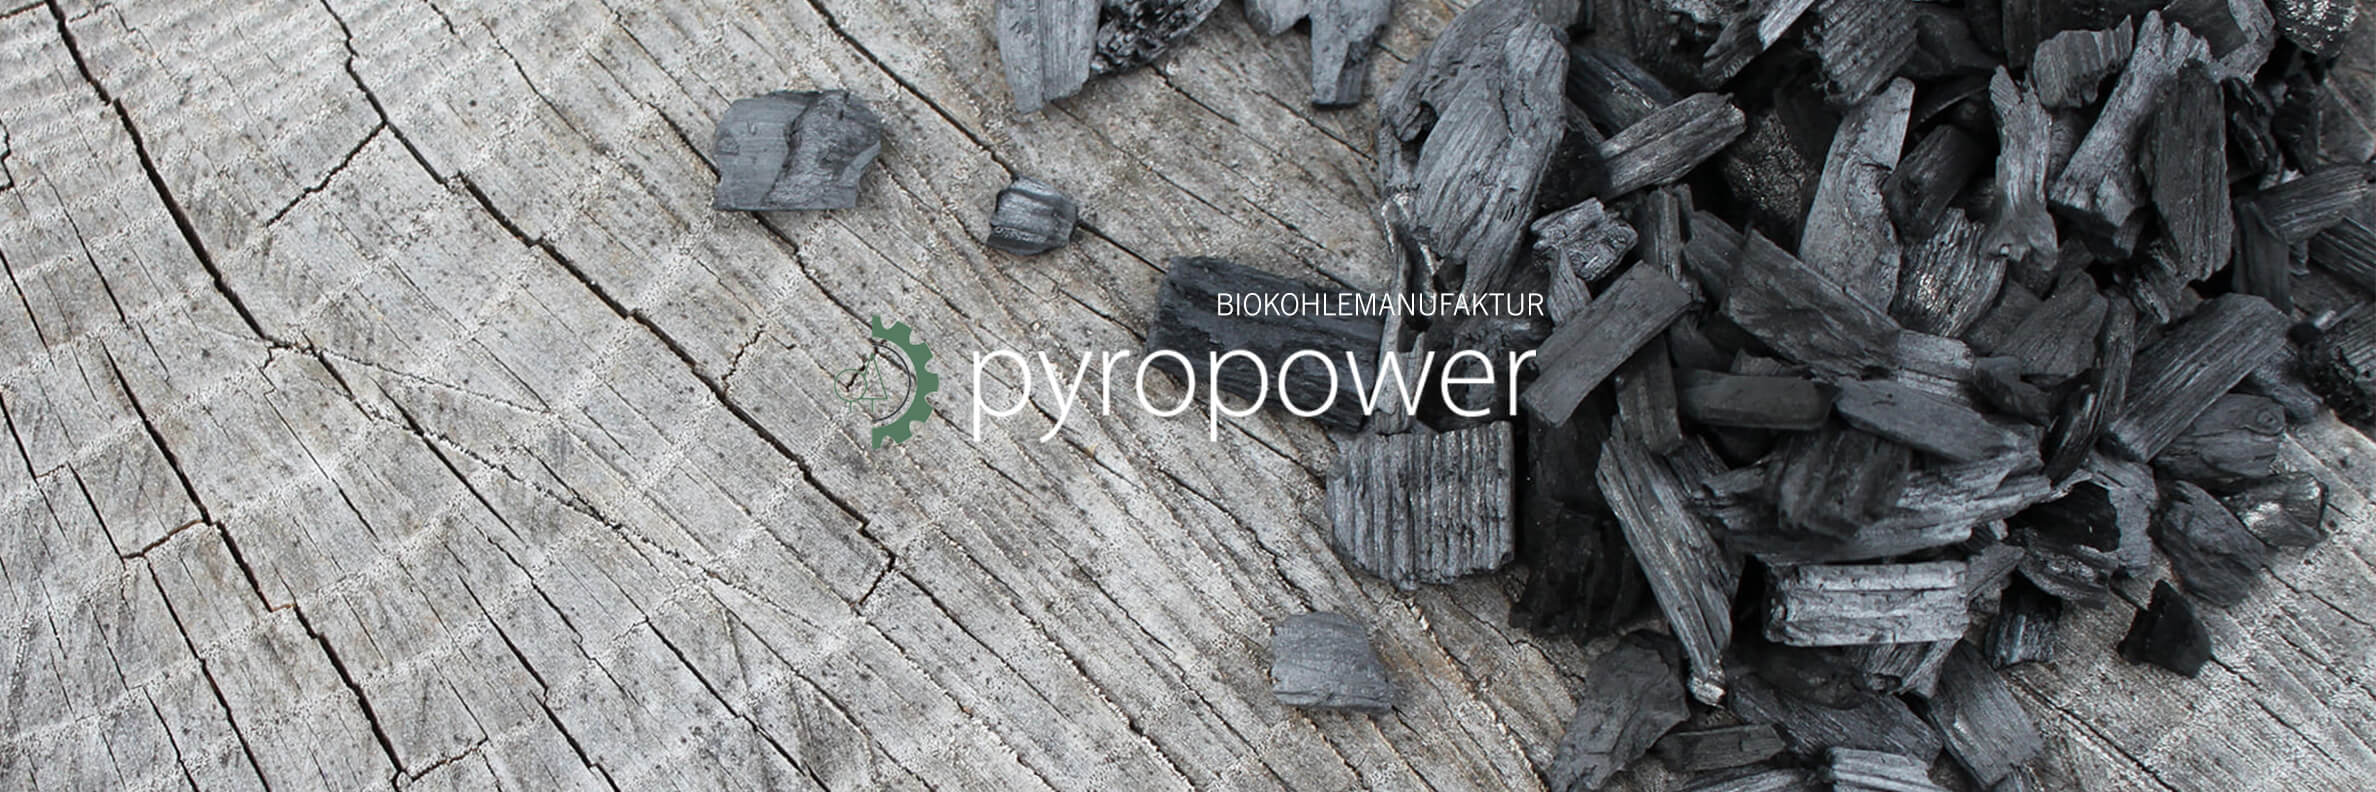 Biokohle pyropower Onlineshop